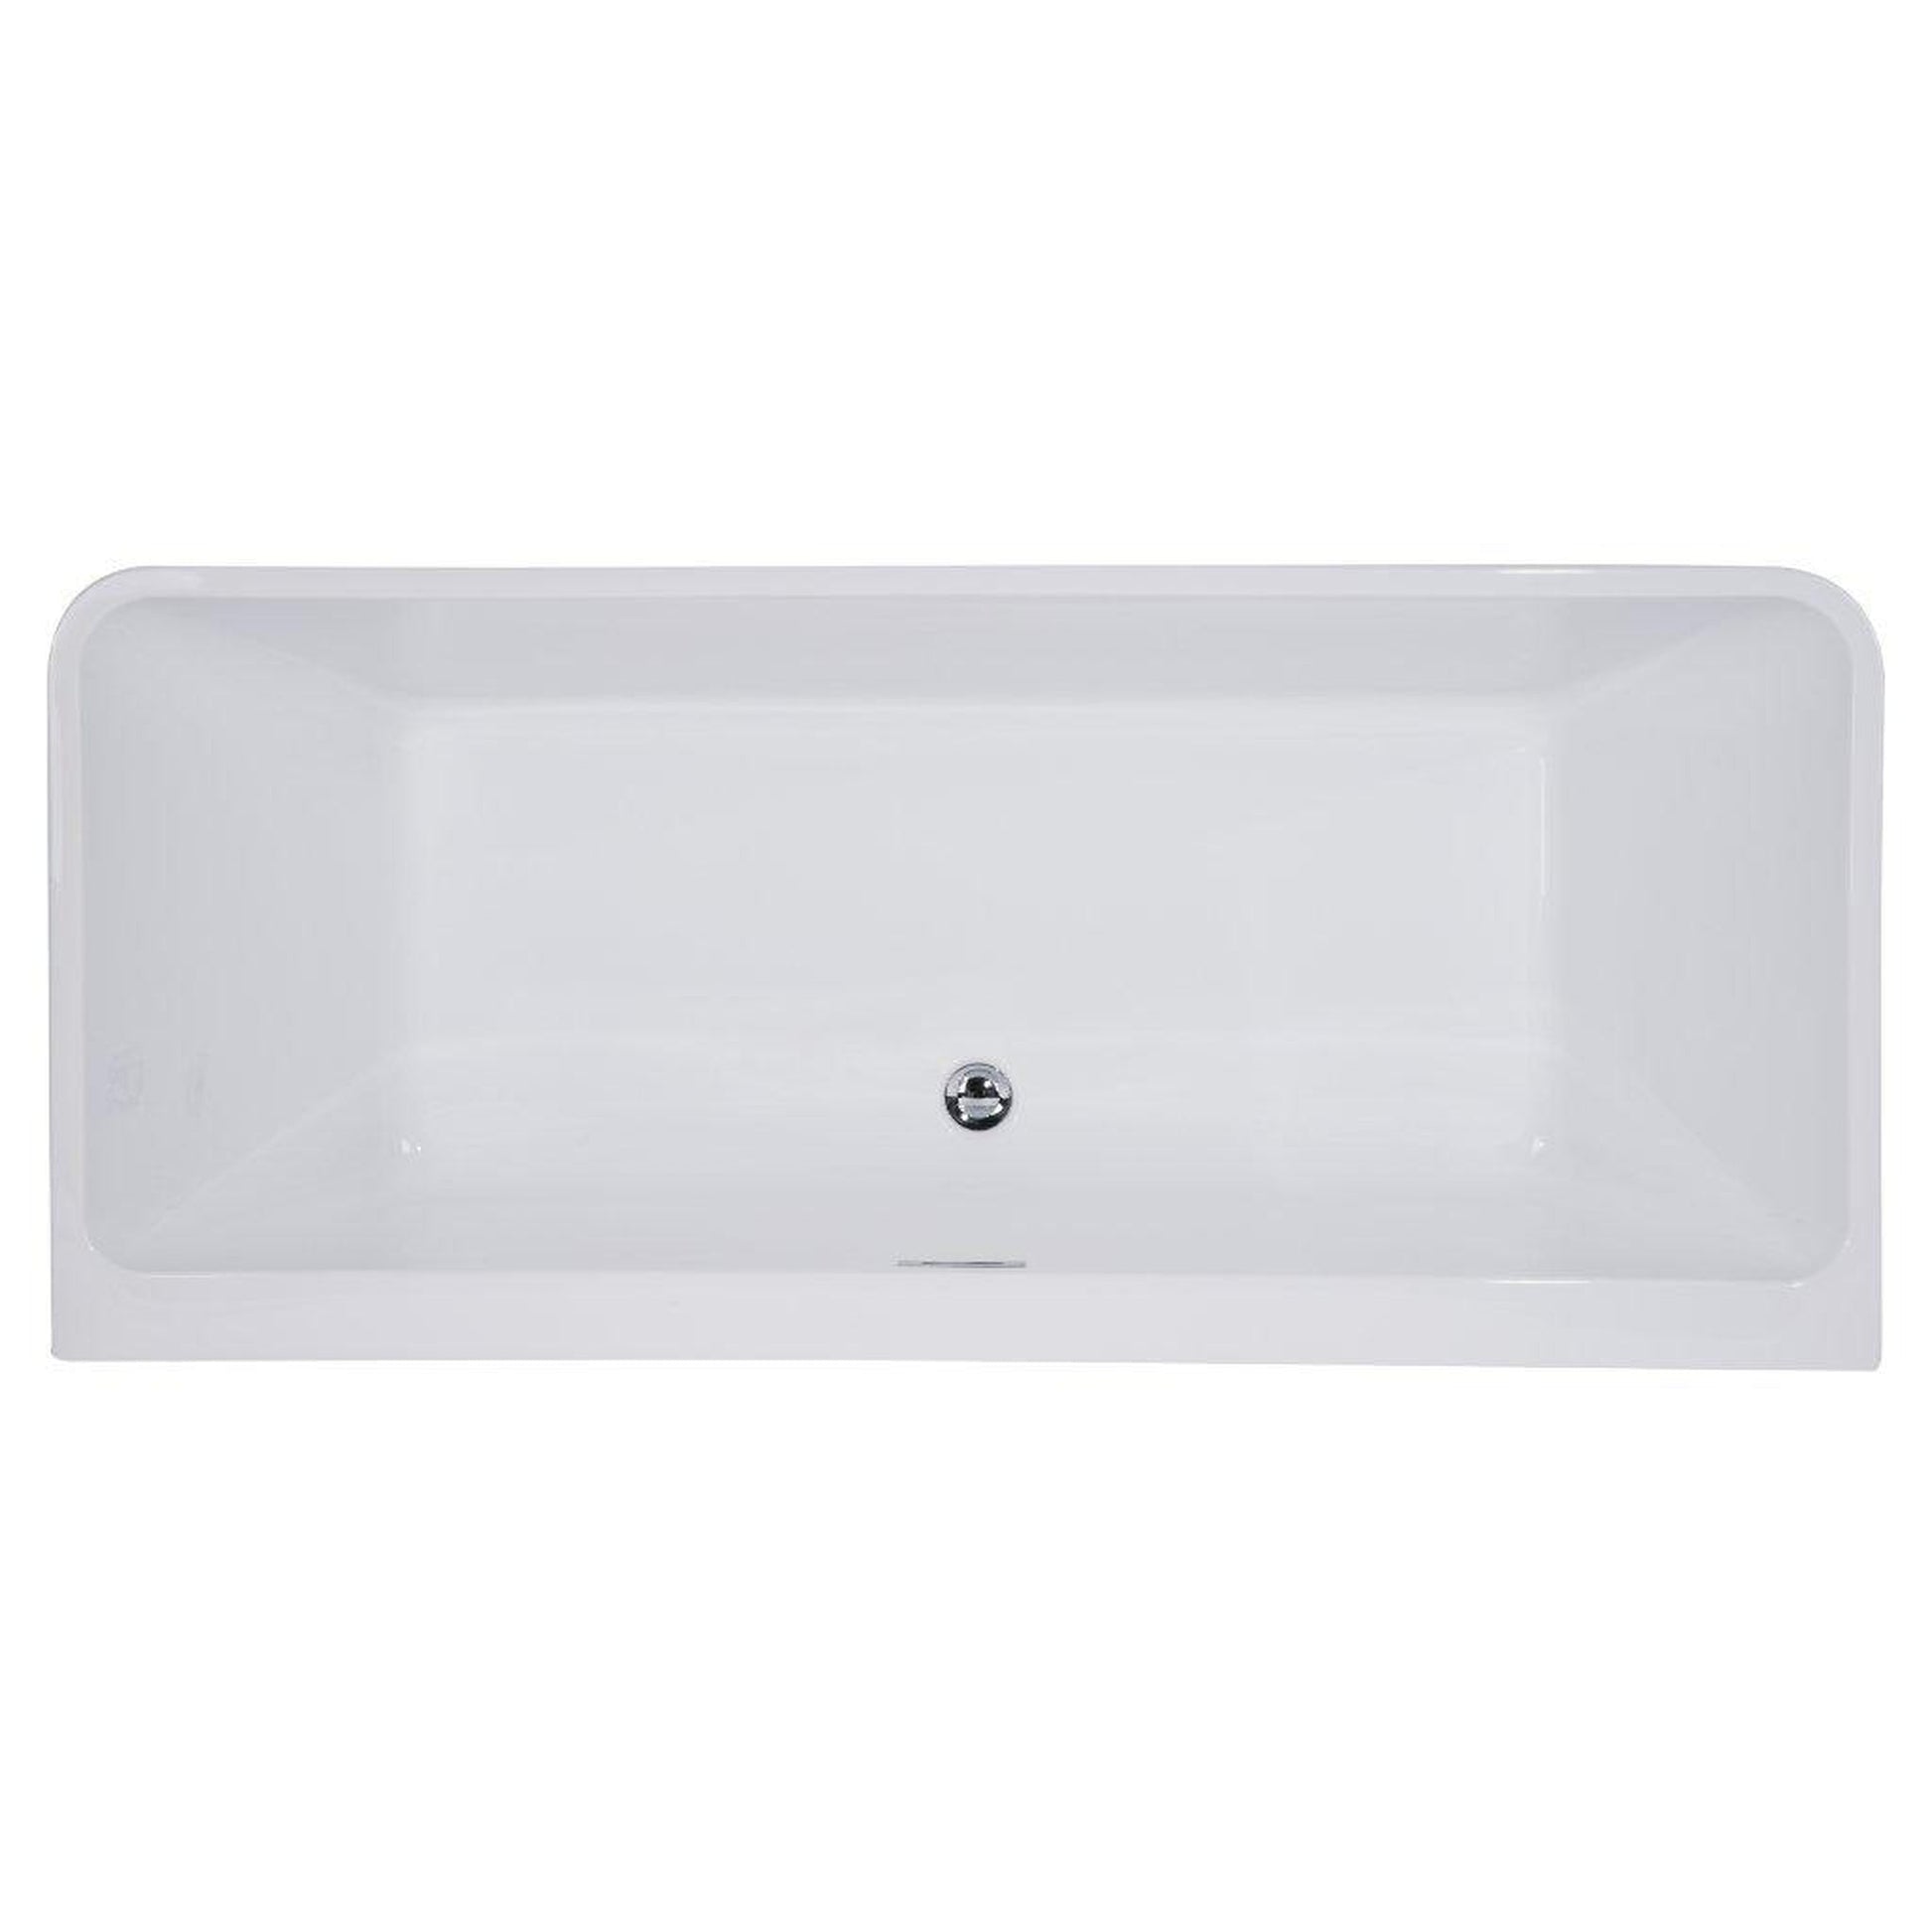 ALFI Brand AB8859 67" One Person Freestanding White Rectangle Acrylic Soaking Bathtub